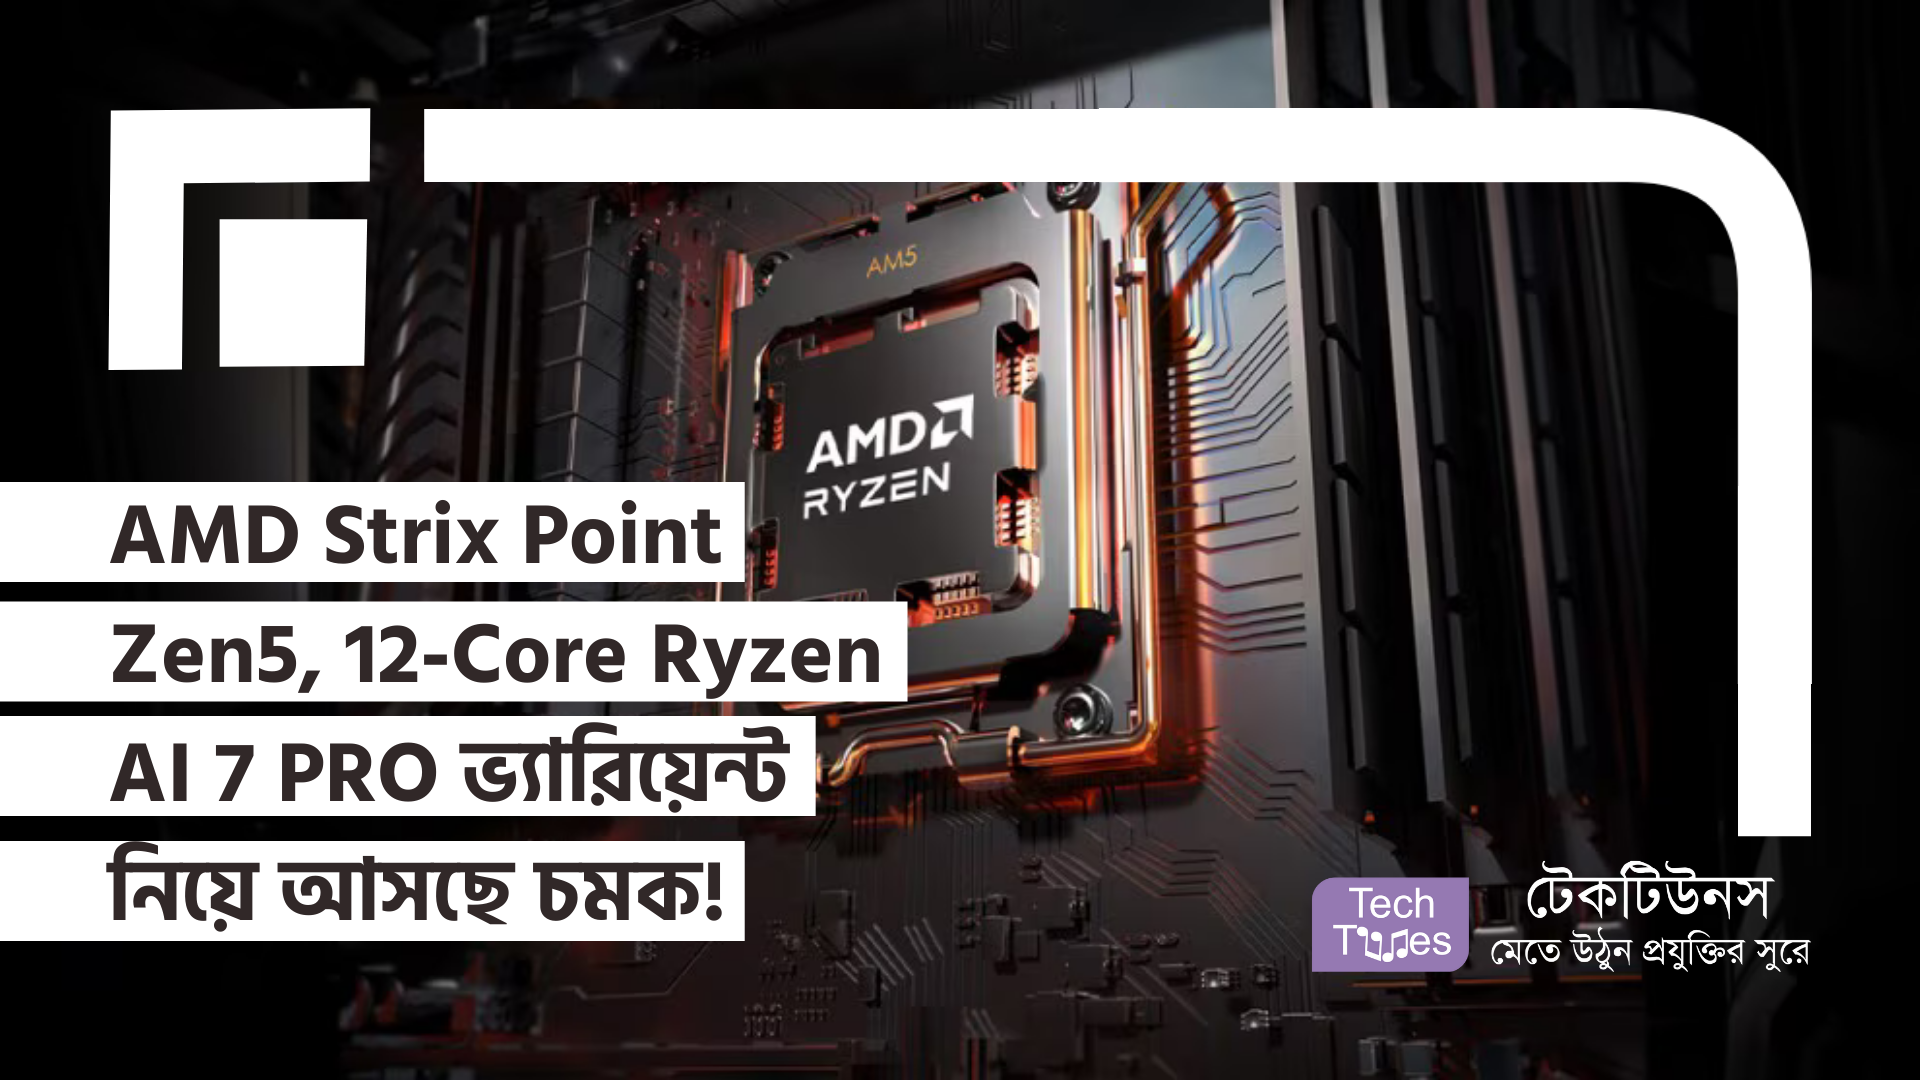 AMD Strix Point Zen5 APU – 12-Core Ryzen AI 7 PRO ভ্যারিয়েন্ট নিয়ে আসছে চমক! | Techtunes